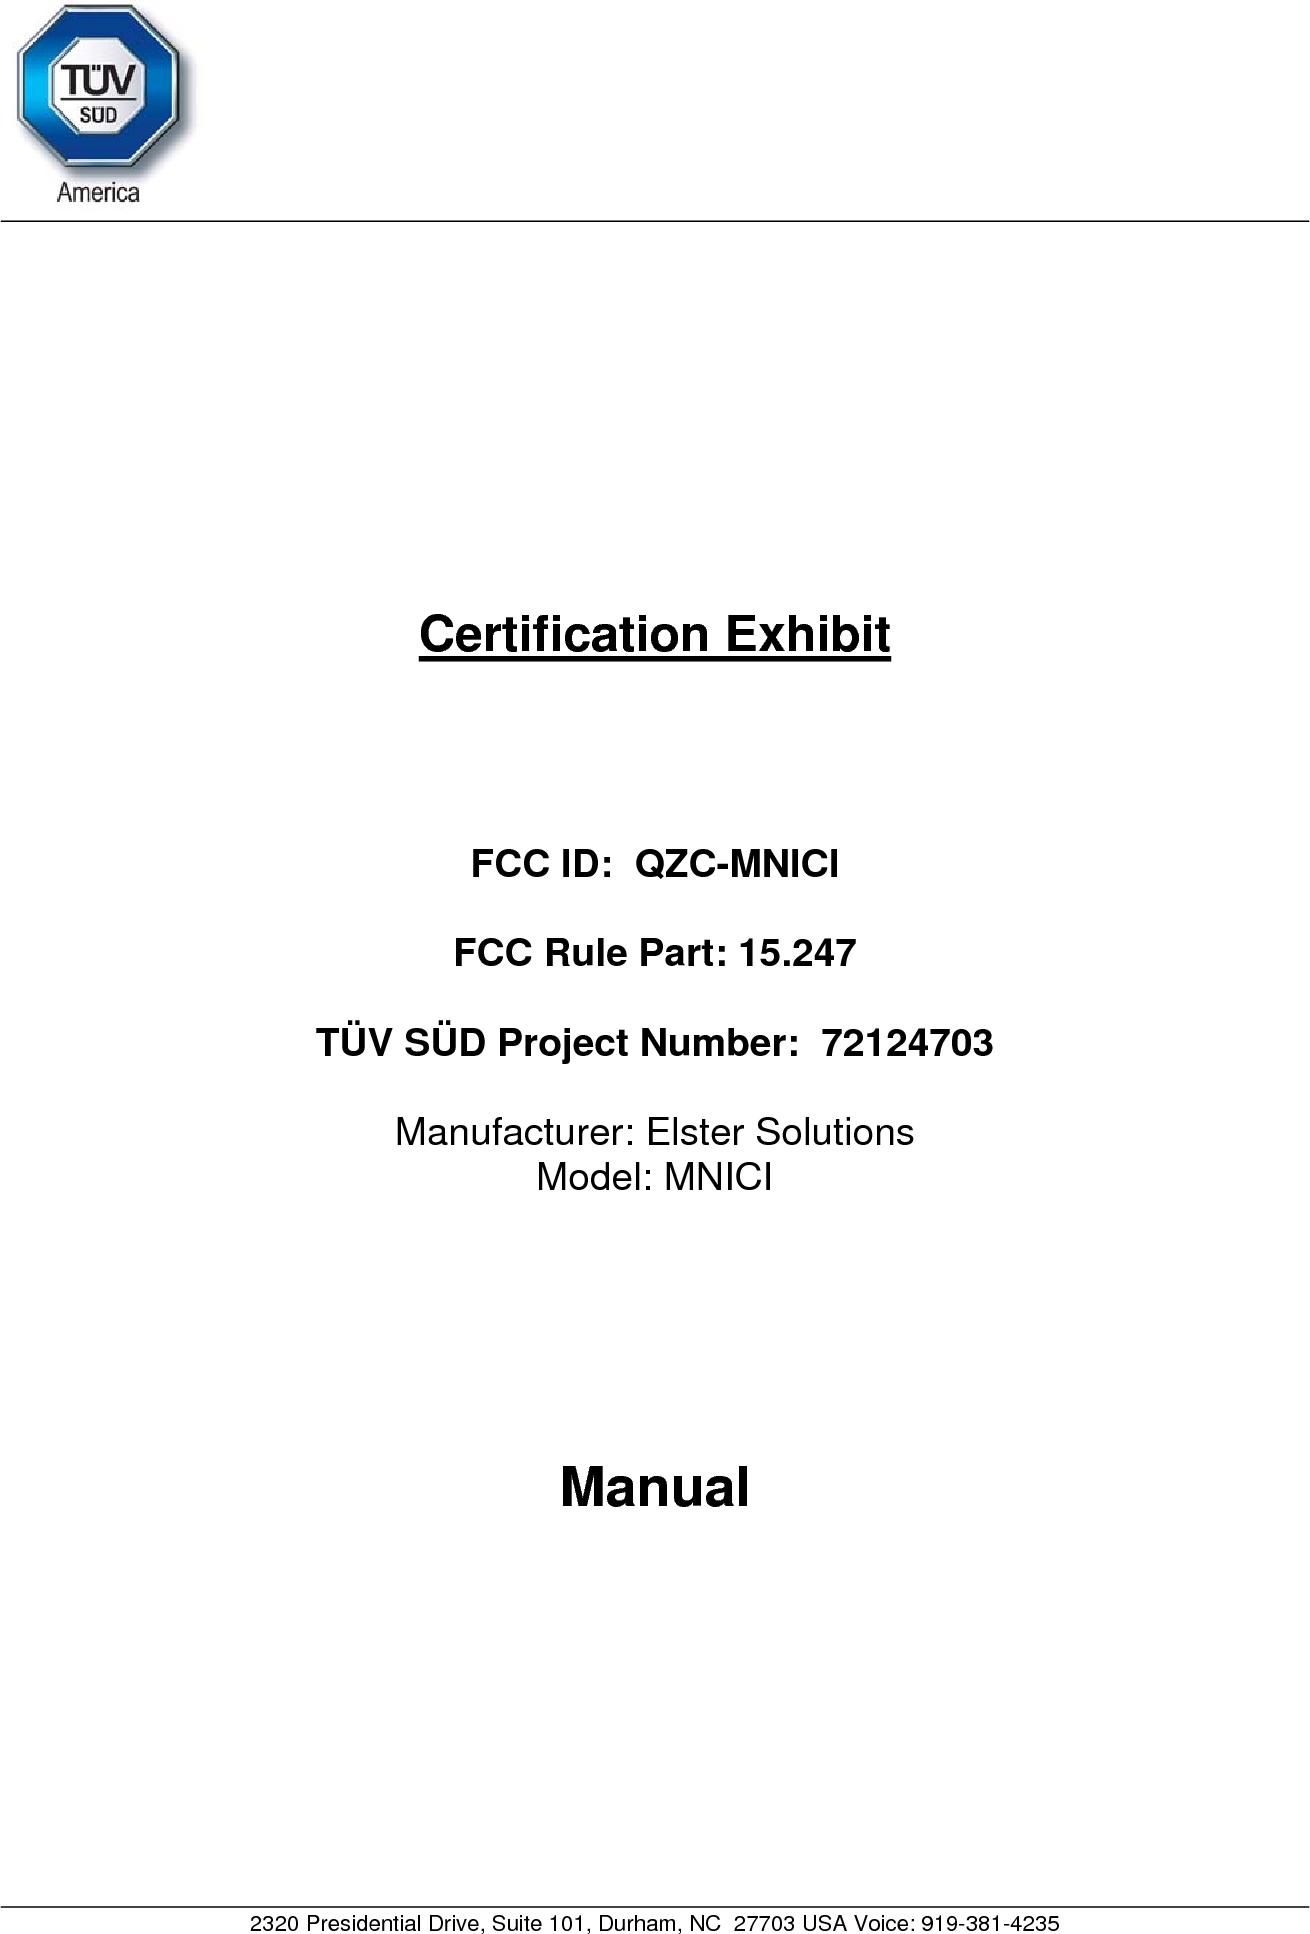    2320 Presidential Drive, Suite 101, Durham, NC  27703 USA Voice: 919-381-4235     Certification Exhibit     FCC ID:  QZC-MNICI  FCC Rule Part: 15.247  TÜV SÜD Project Number:  72124703   Manufacturer: Elster Solutions Model: MNICI     Manual  